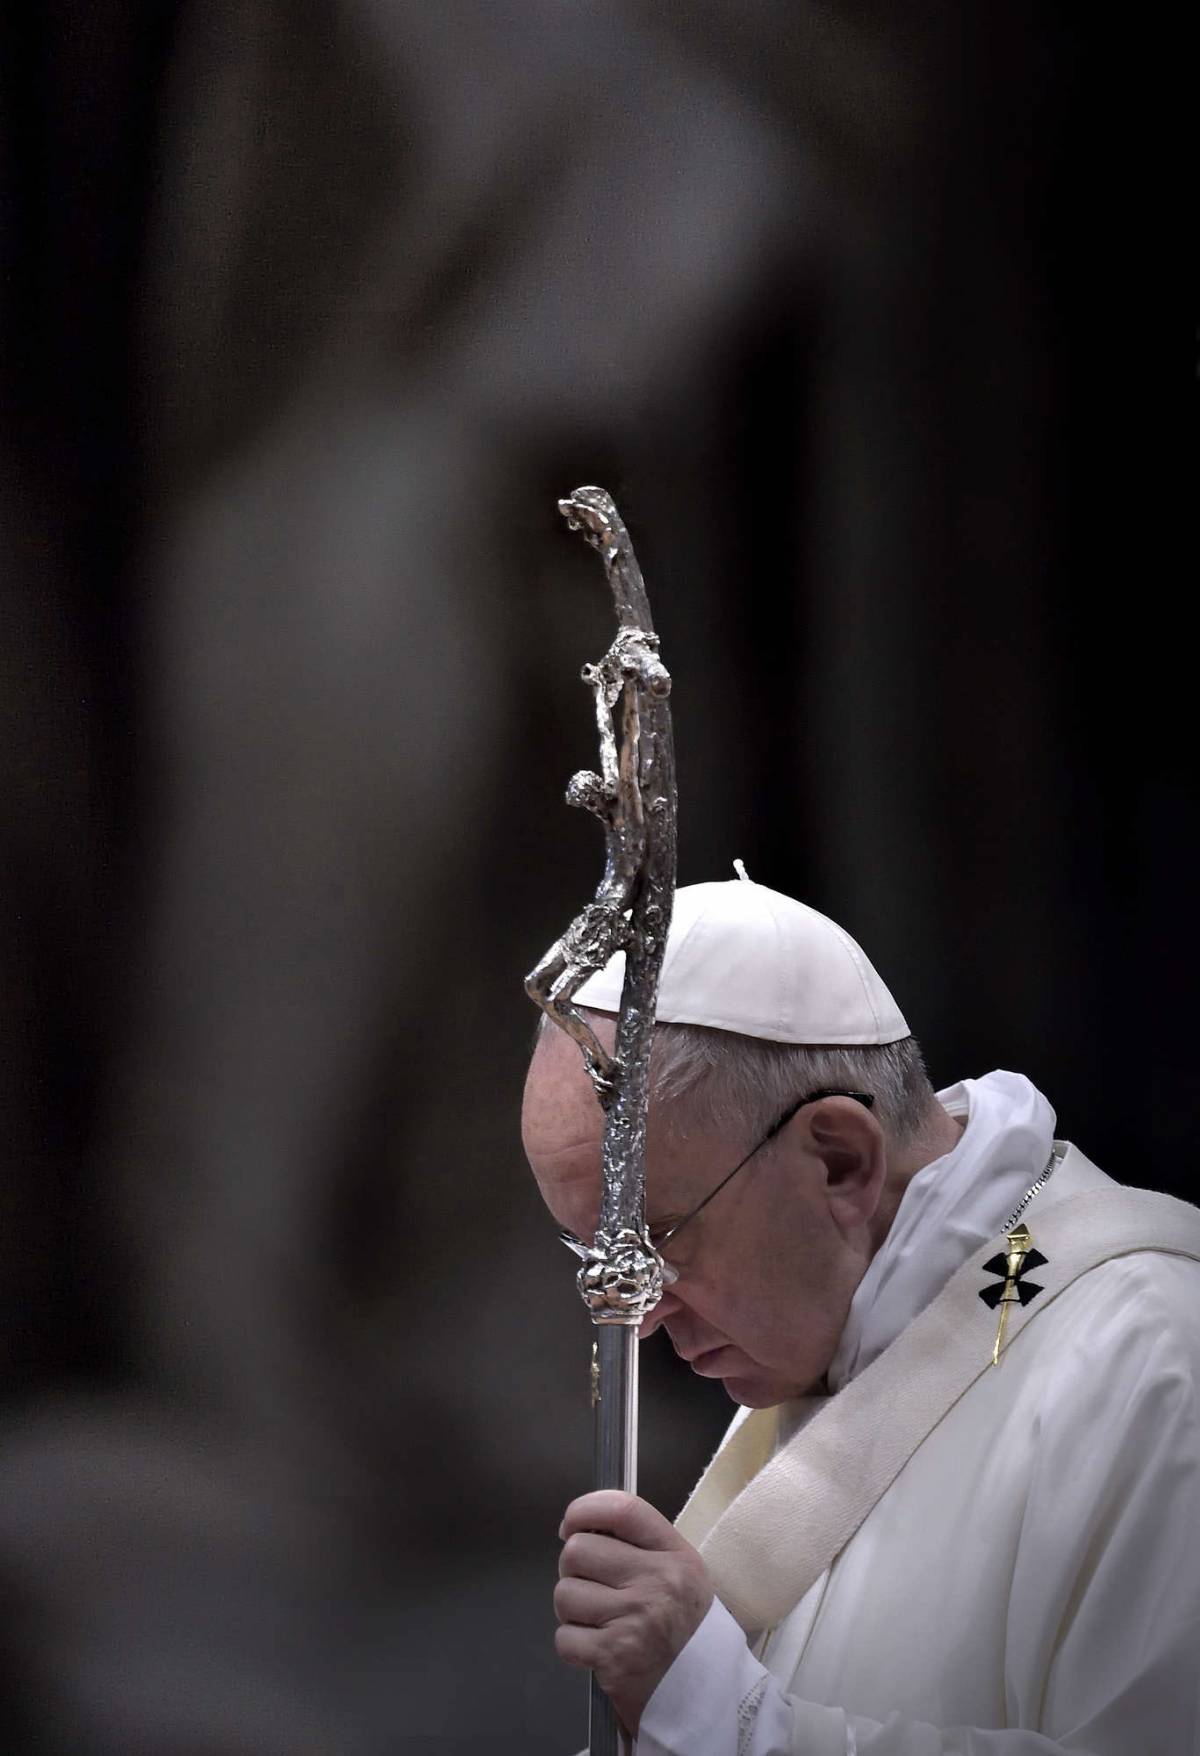 Chiavette Usb a prova di Vatileaks: così Bergoglio tutela i suoi segreti